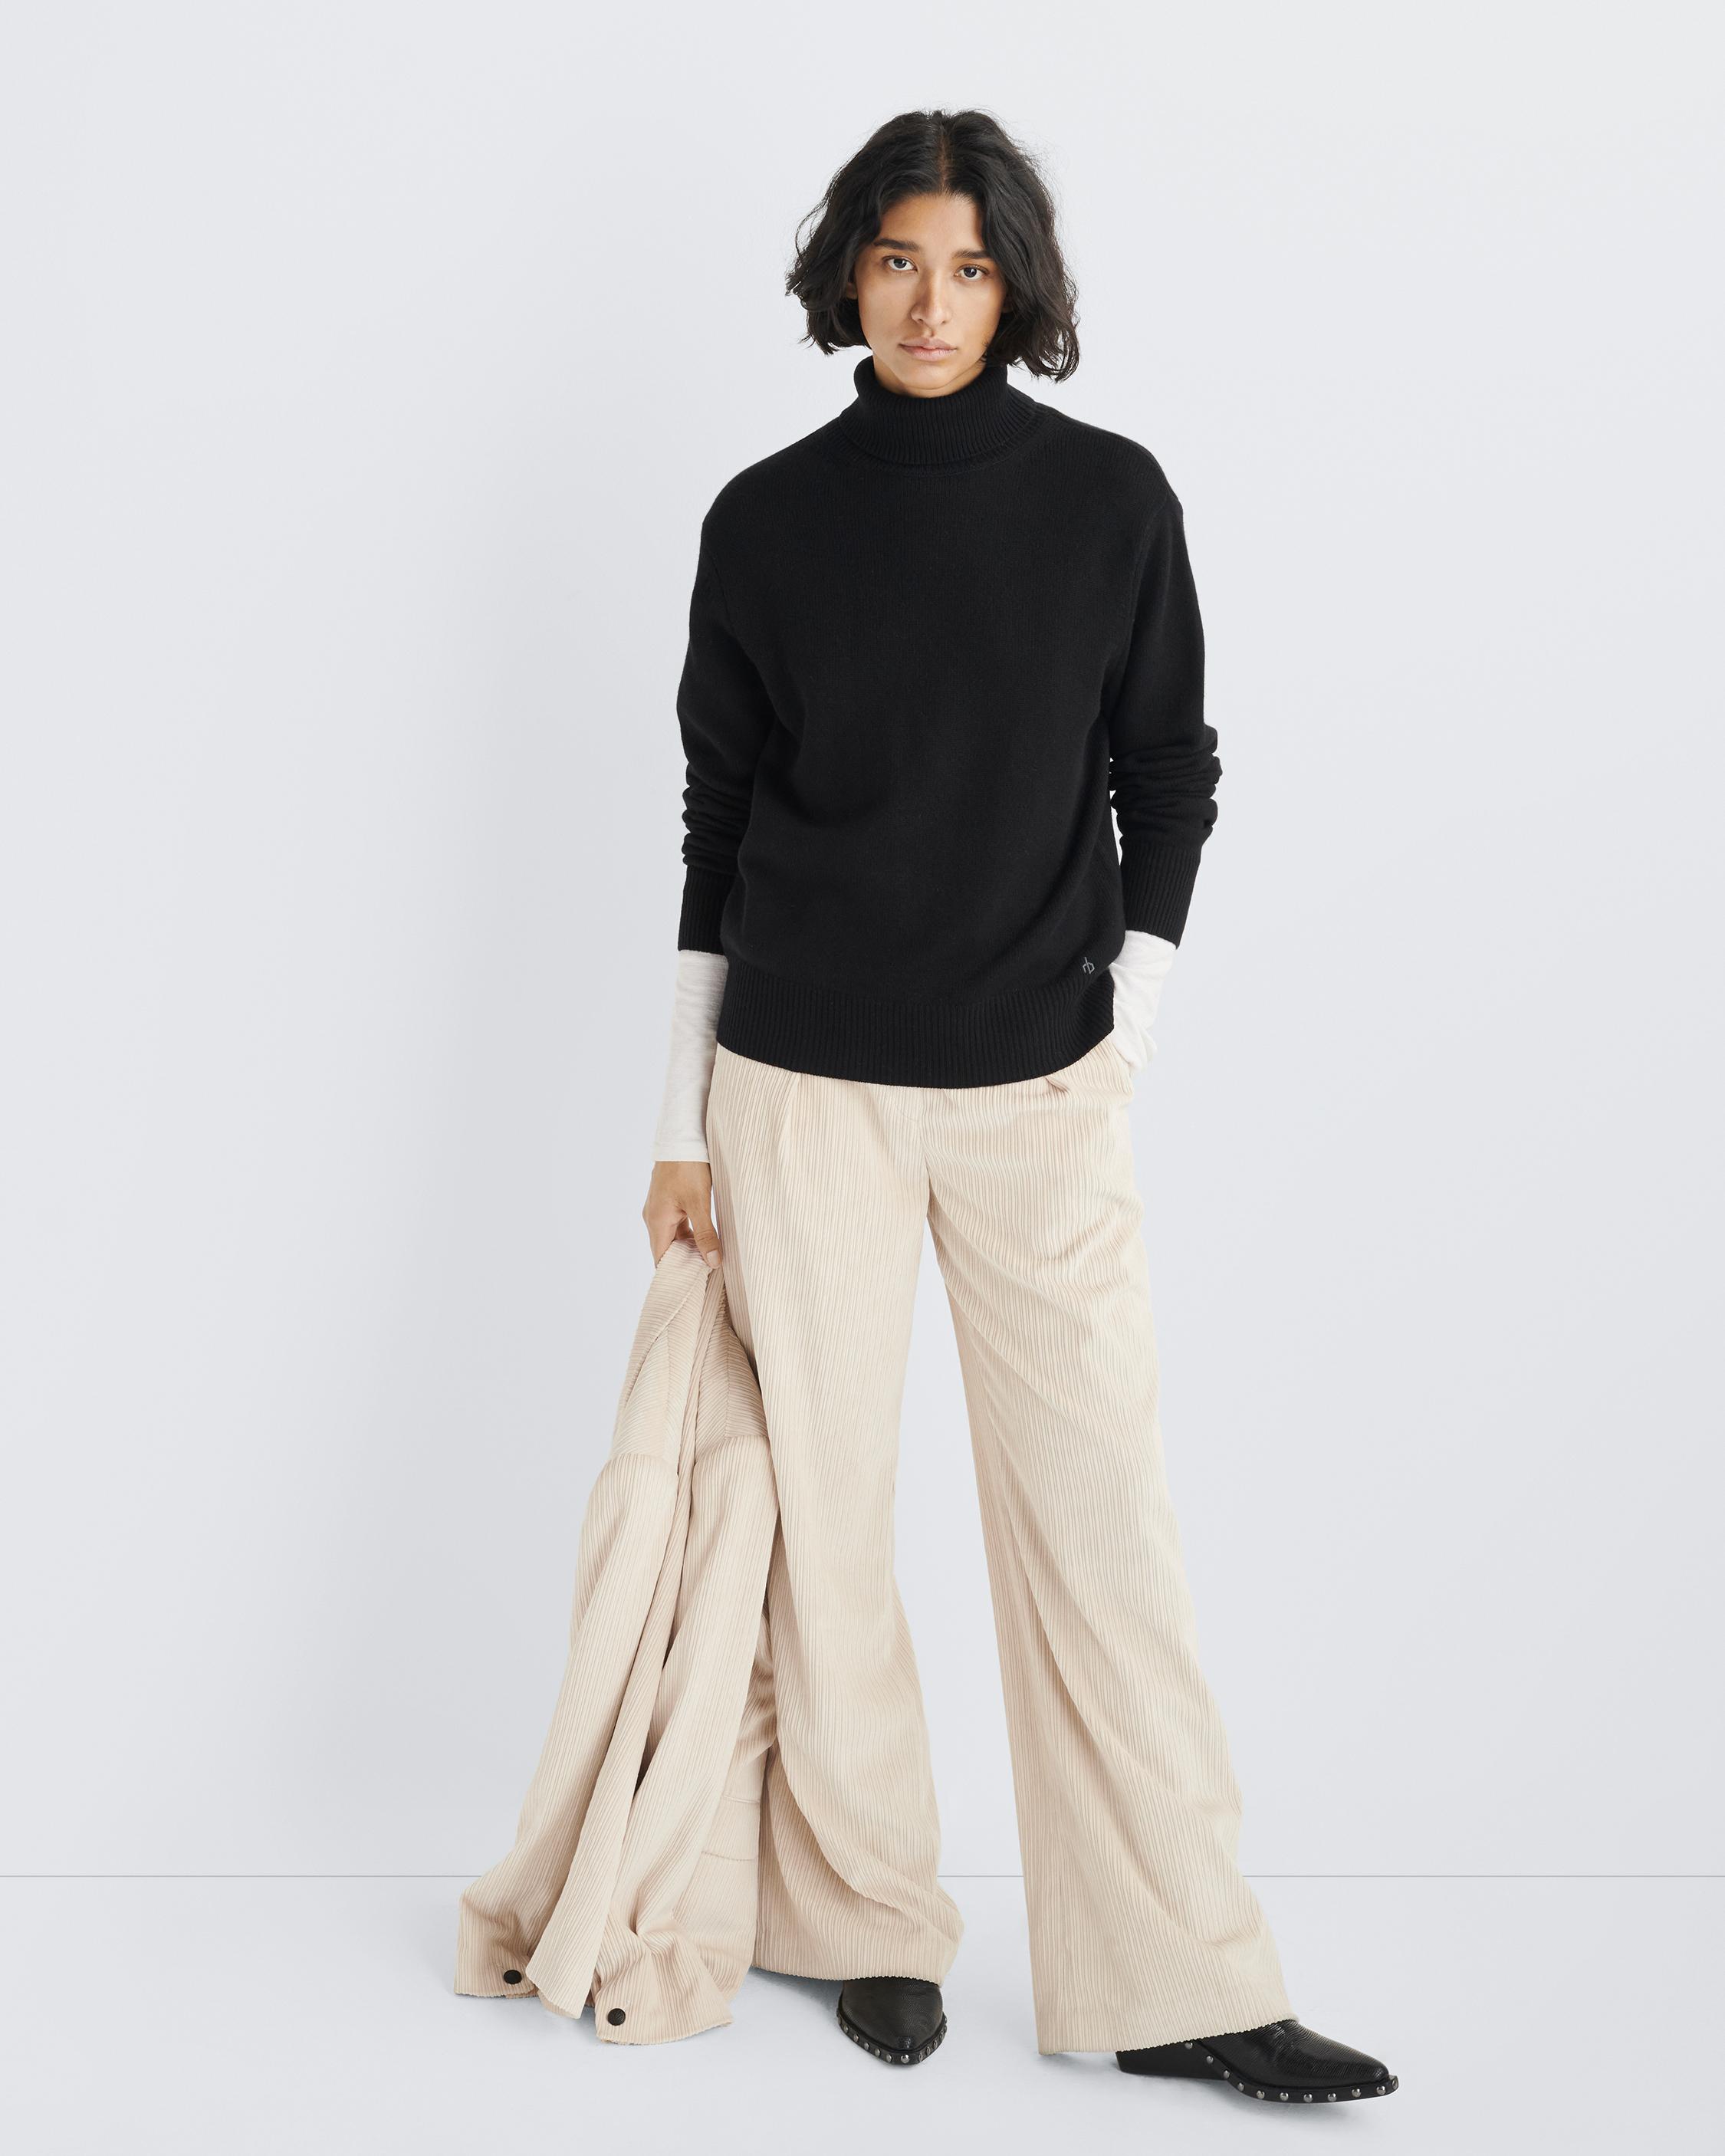 Soft Winter Knits: Slouchy Turtleneck & Cashmere Pants - Meagan's Moda